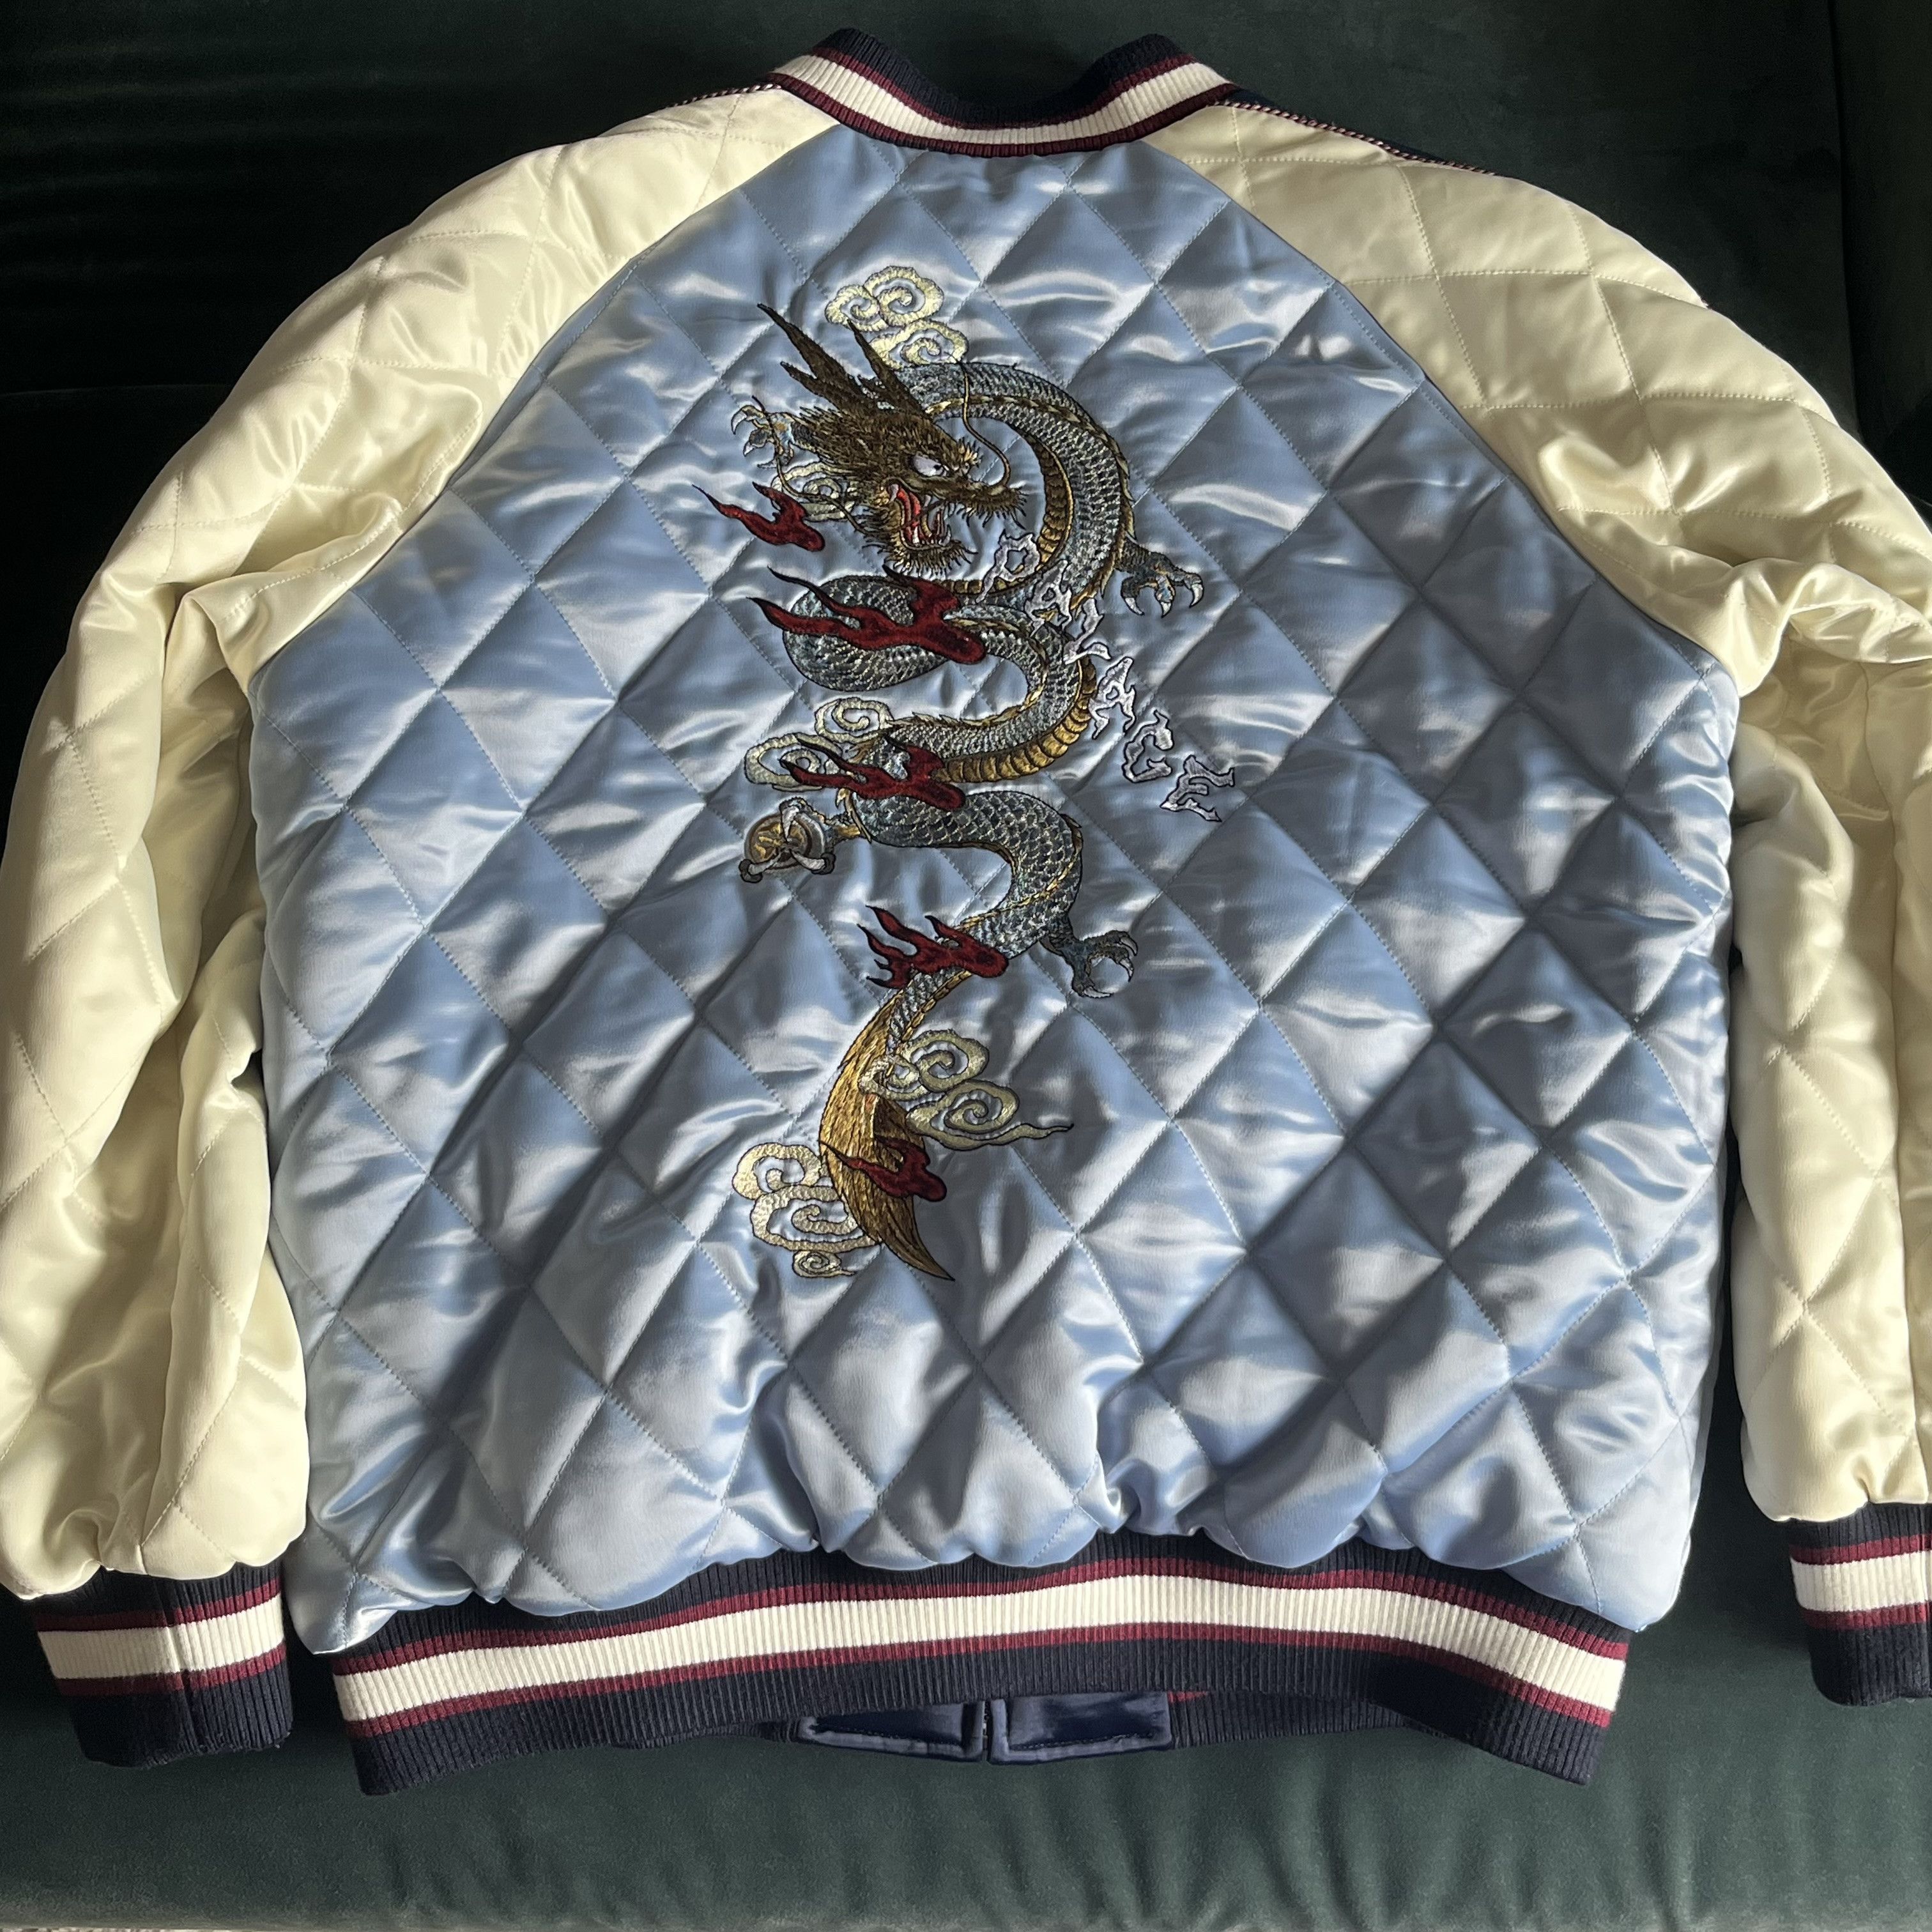 Evisu Evisu x Palace Souvenir Jacket | Grailed